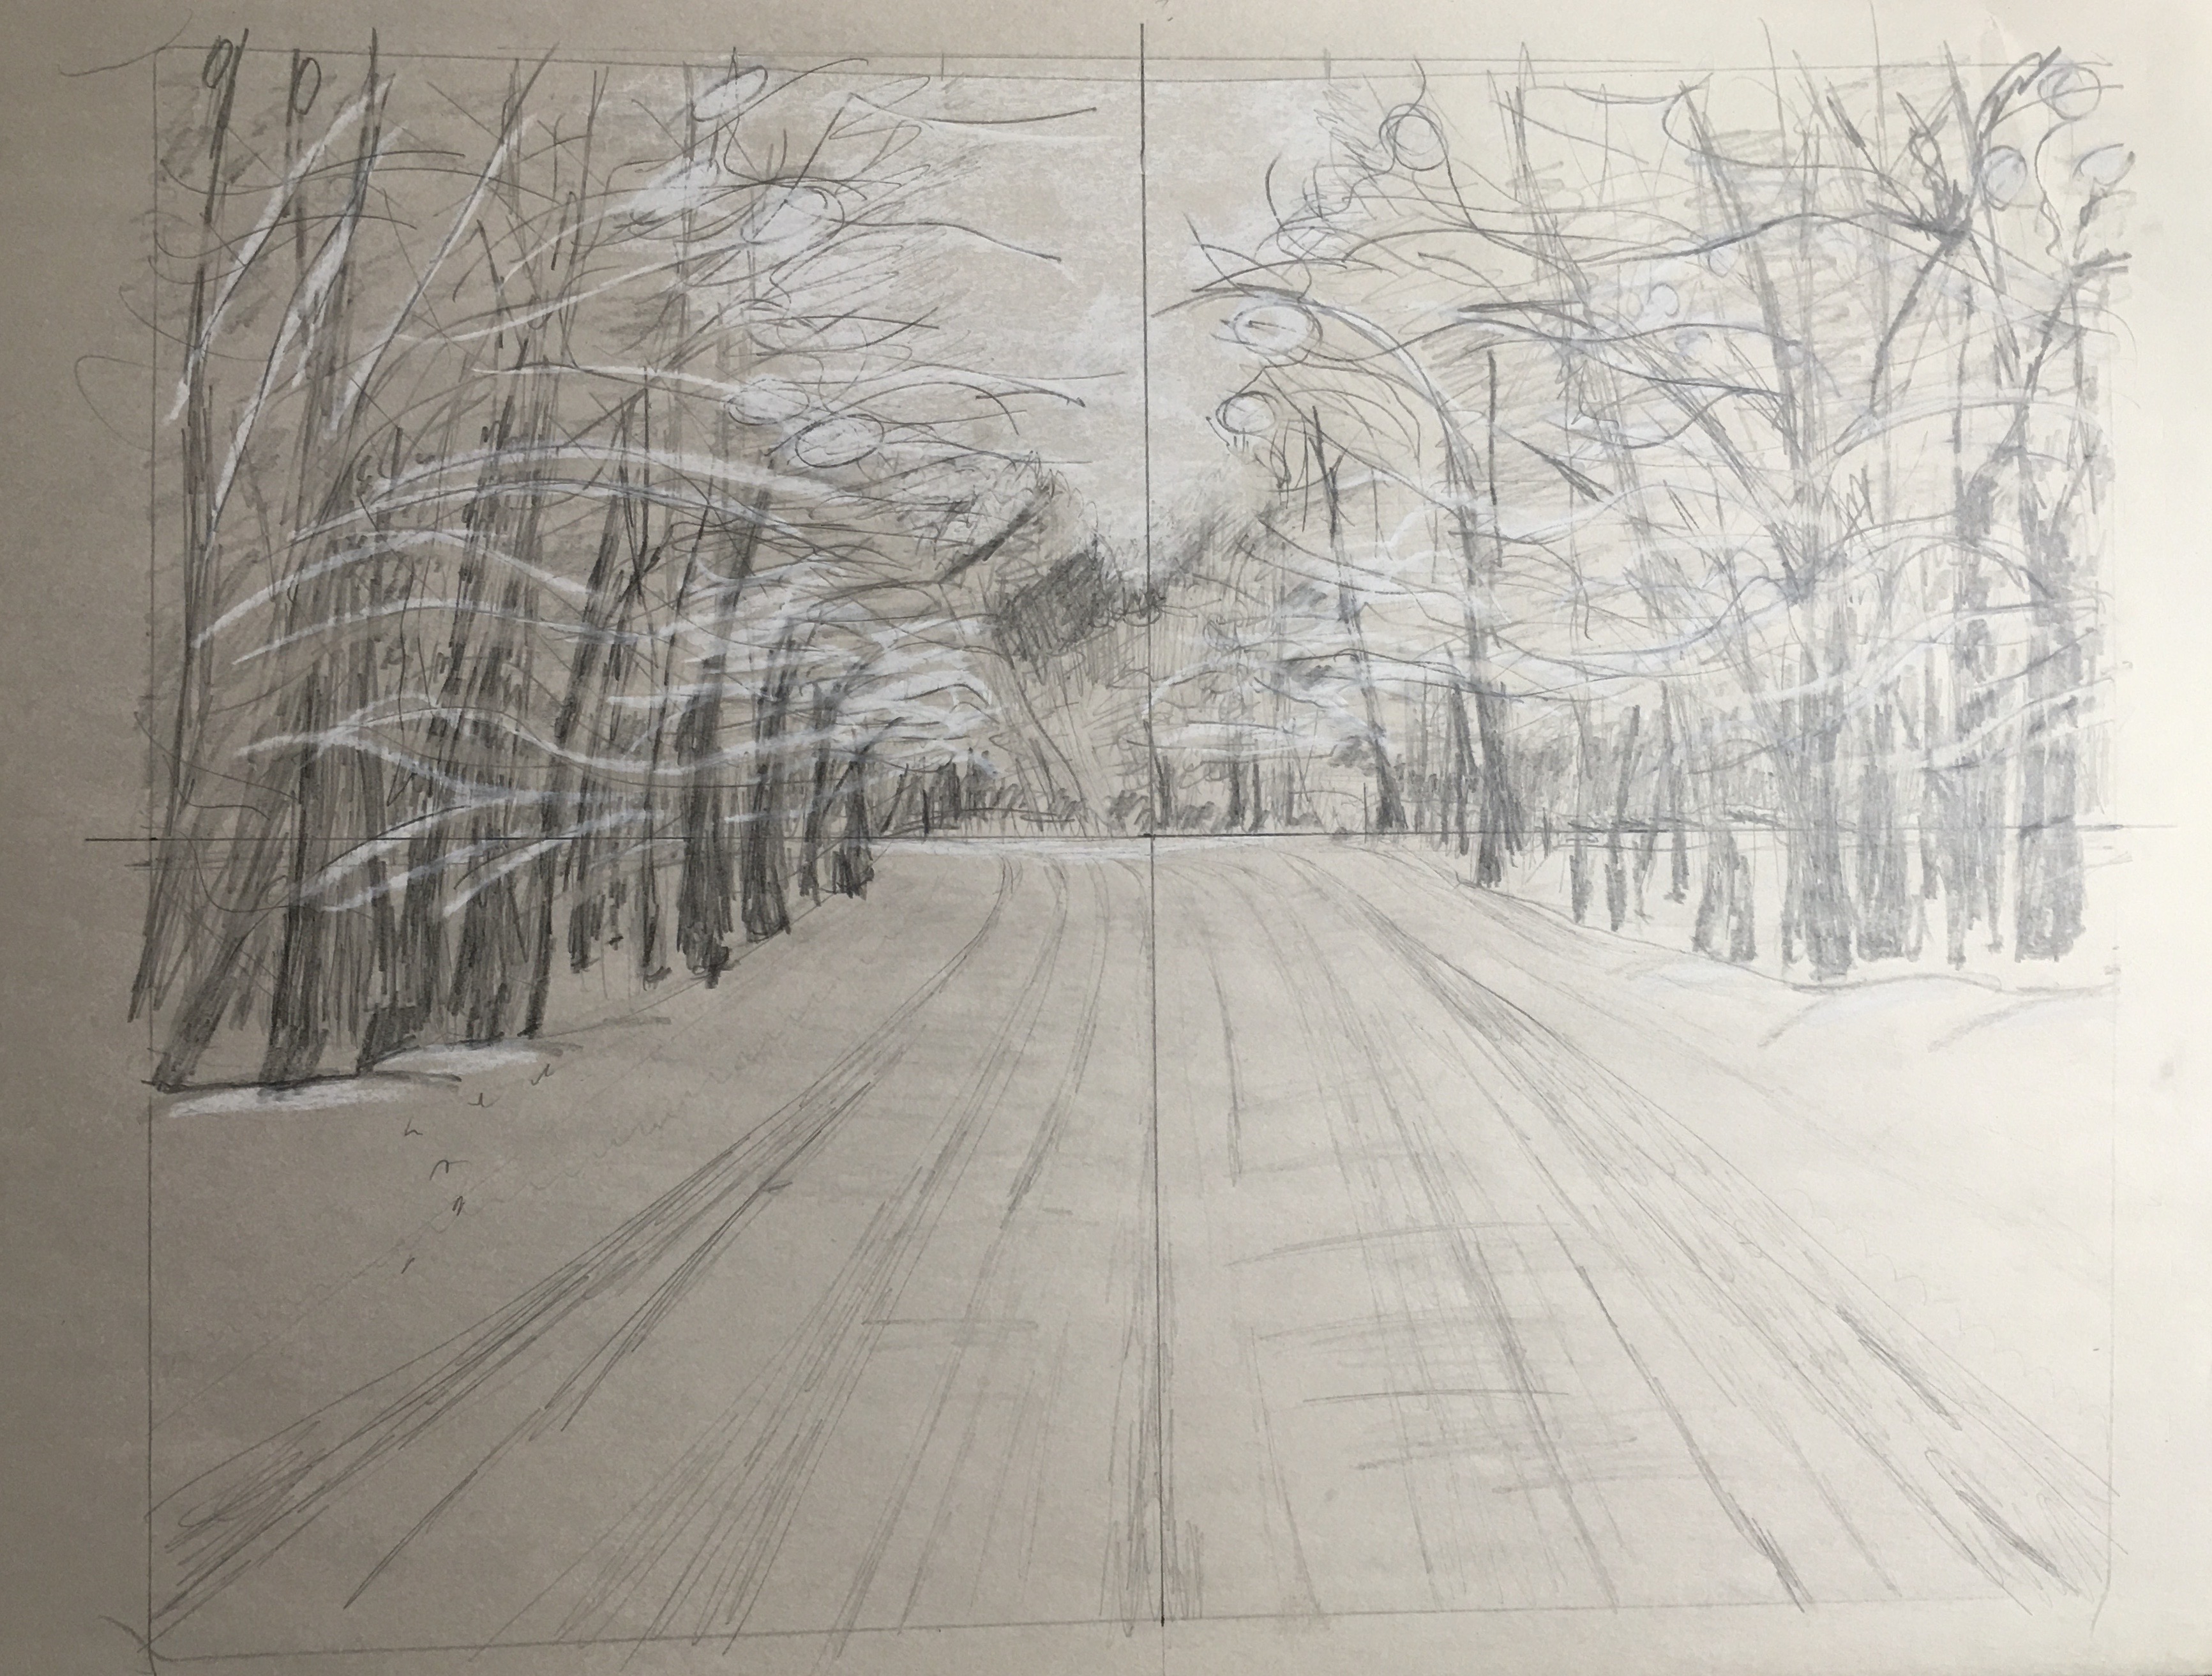 Snow Tipped Study, 2021
Pencil and White Chalk on Newsprint, Walli White, artist